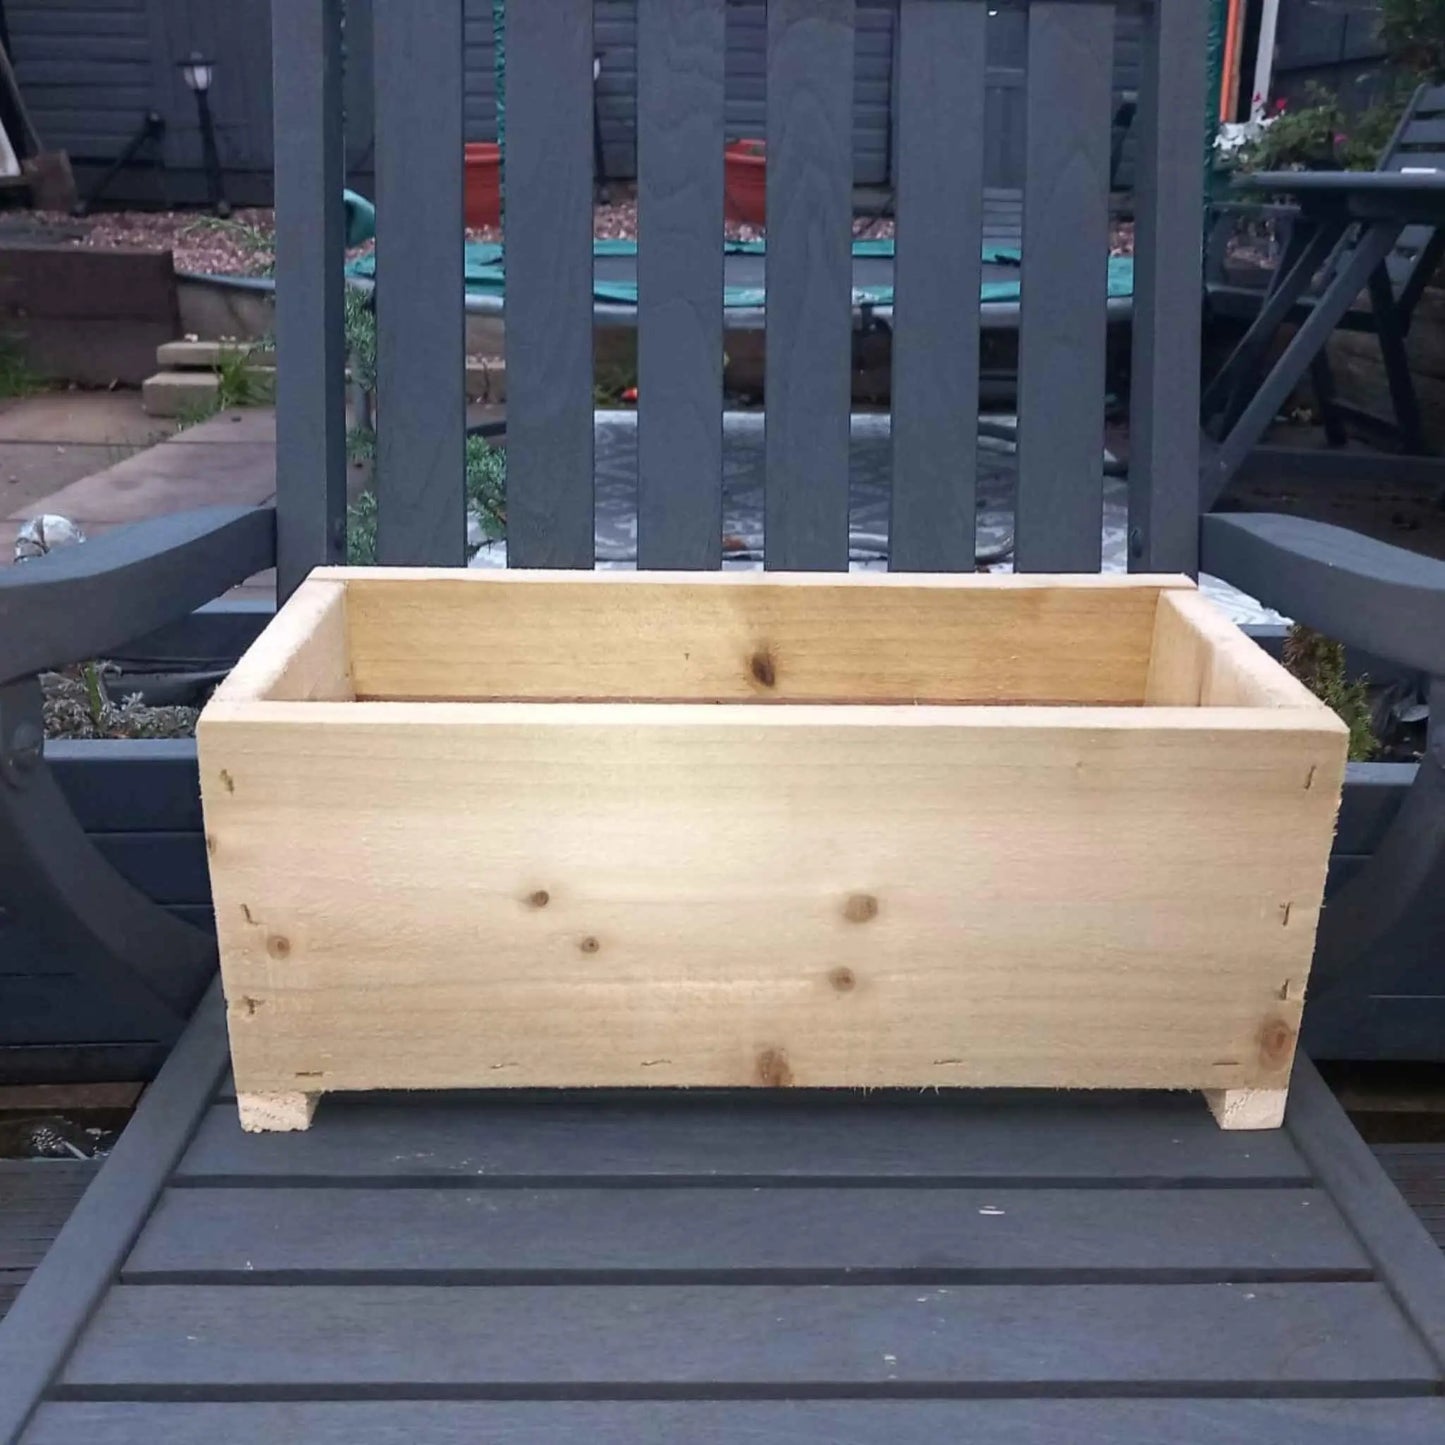 40cm Rustic Wooden Planter box - Summer Wooden Planters